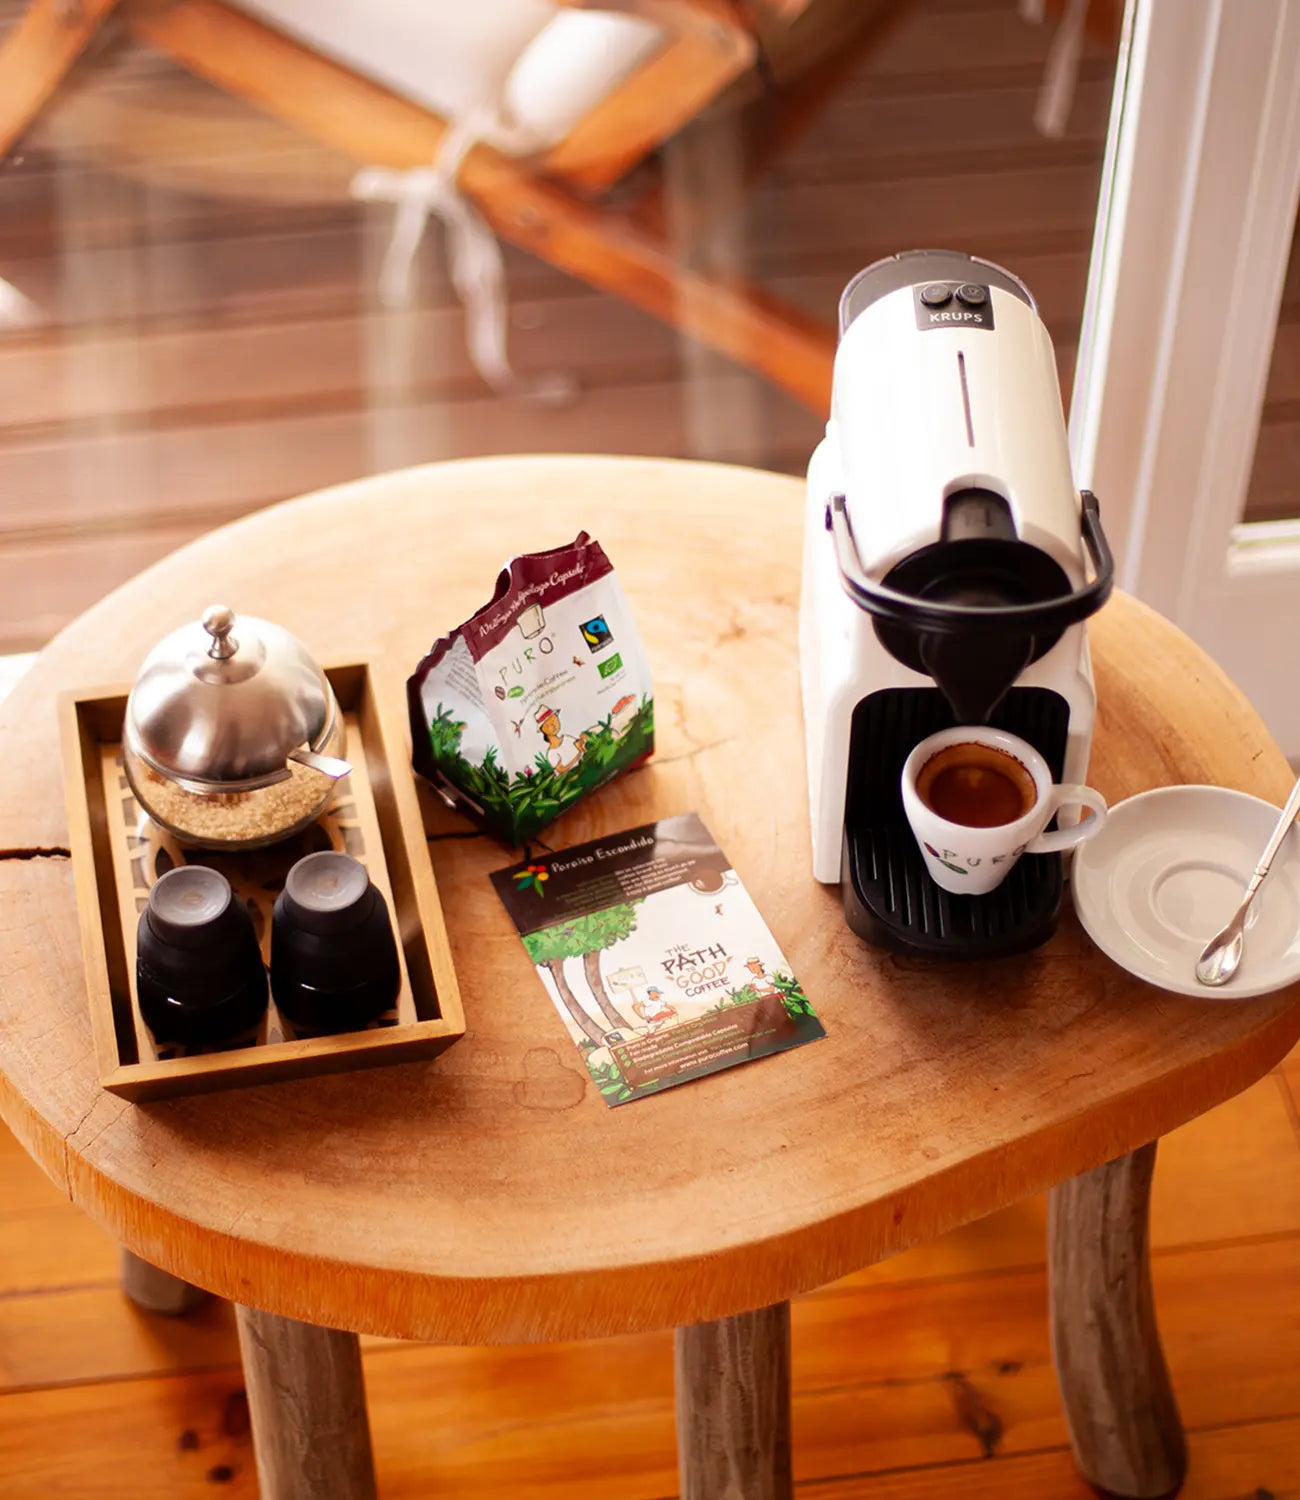 kaffe kapsler og en kaffemaskine med en espresso